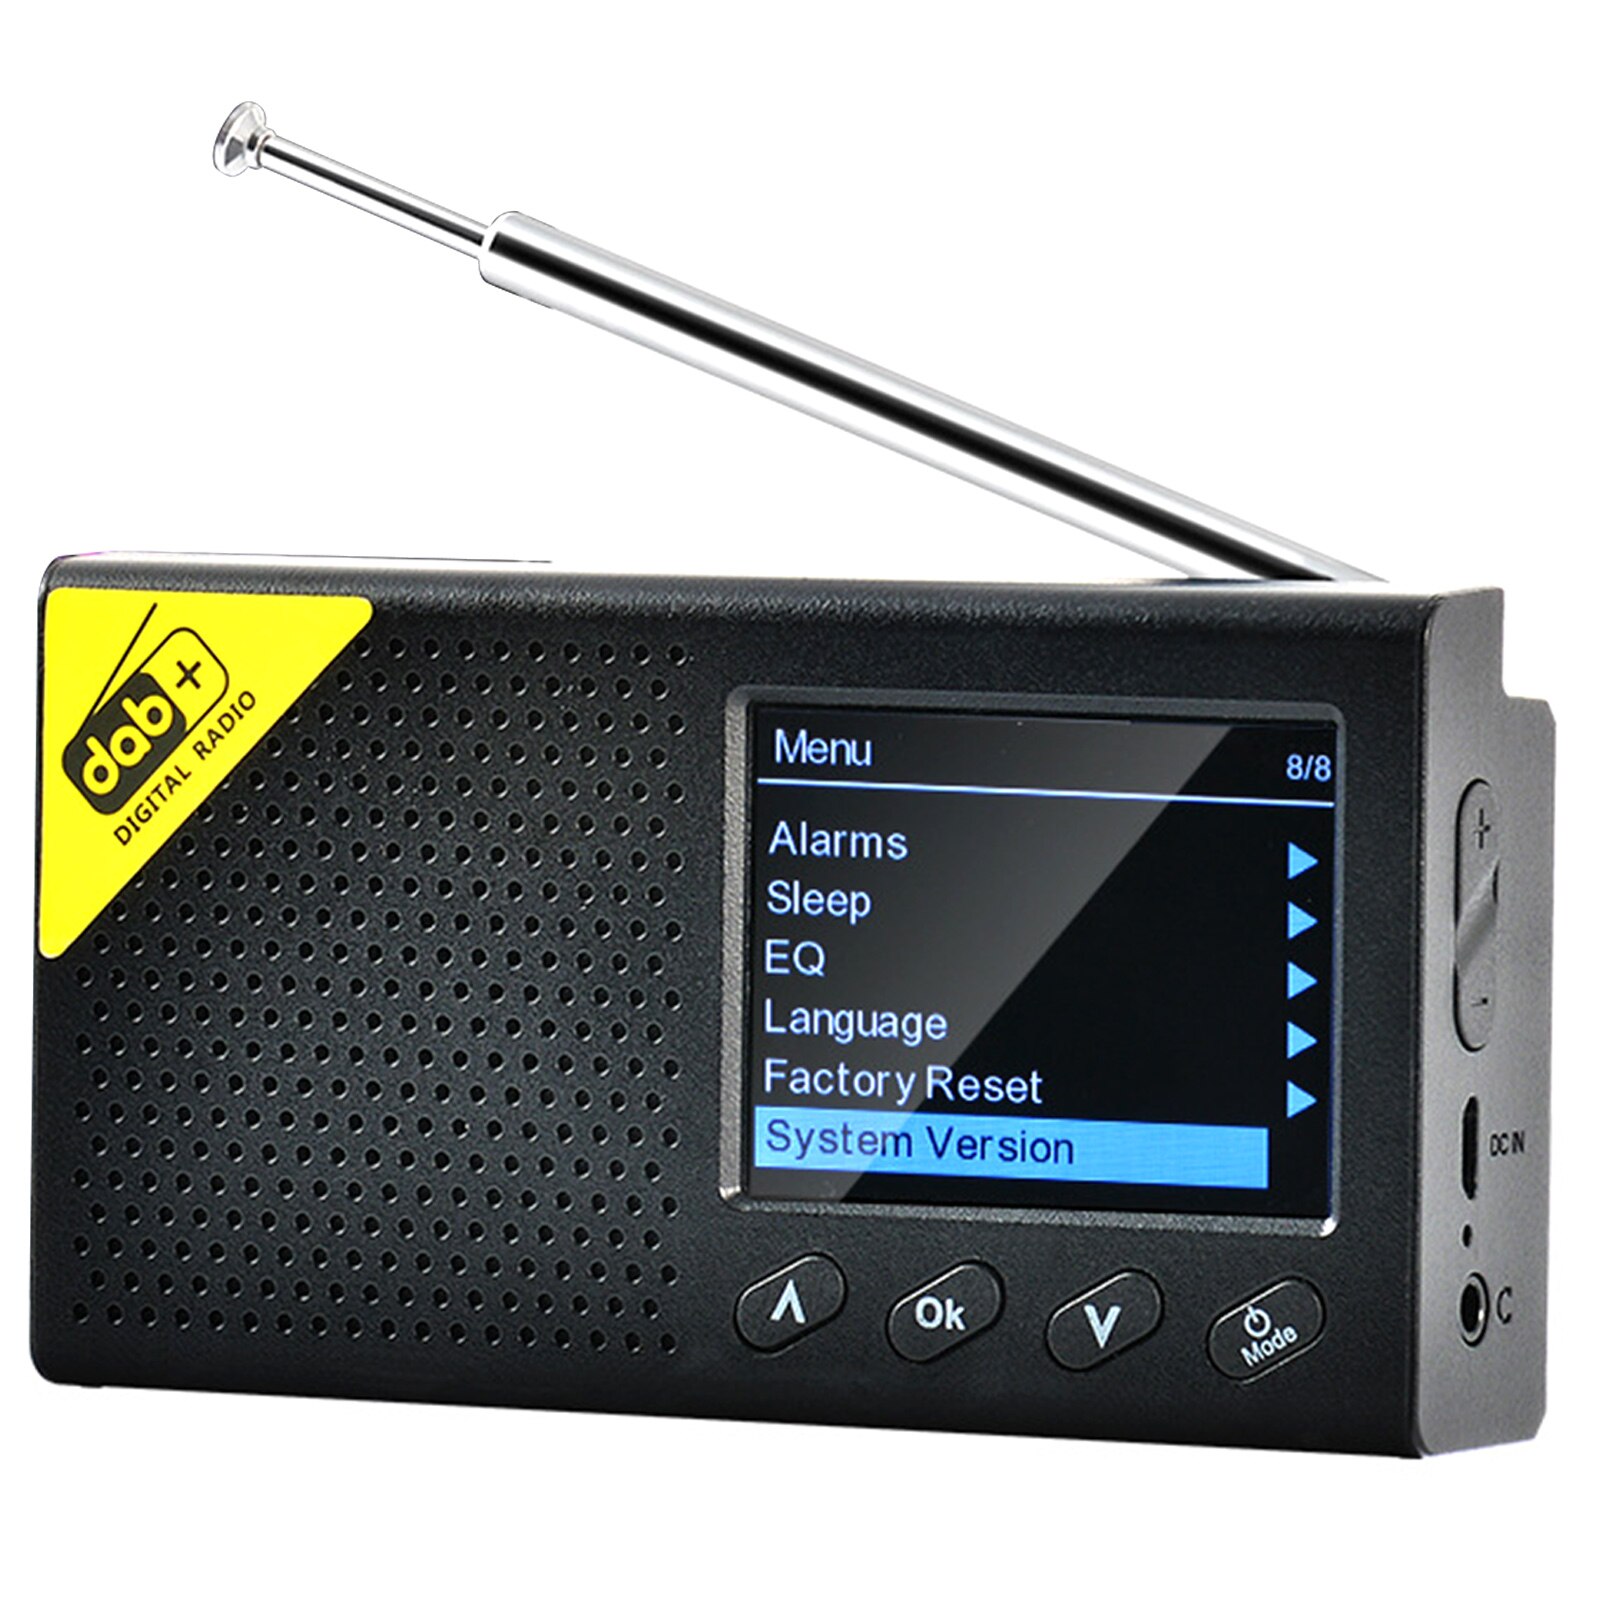 Dab + Digitale Radio 2.4 "Kleuren Lcd Display Oplaadbare Dab/Dab + Fm Radio Met Antenne Geweldig Voor vissen